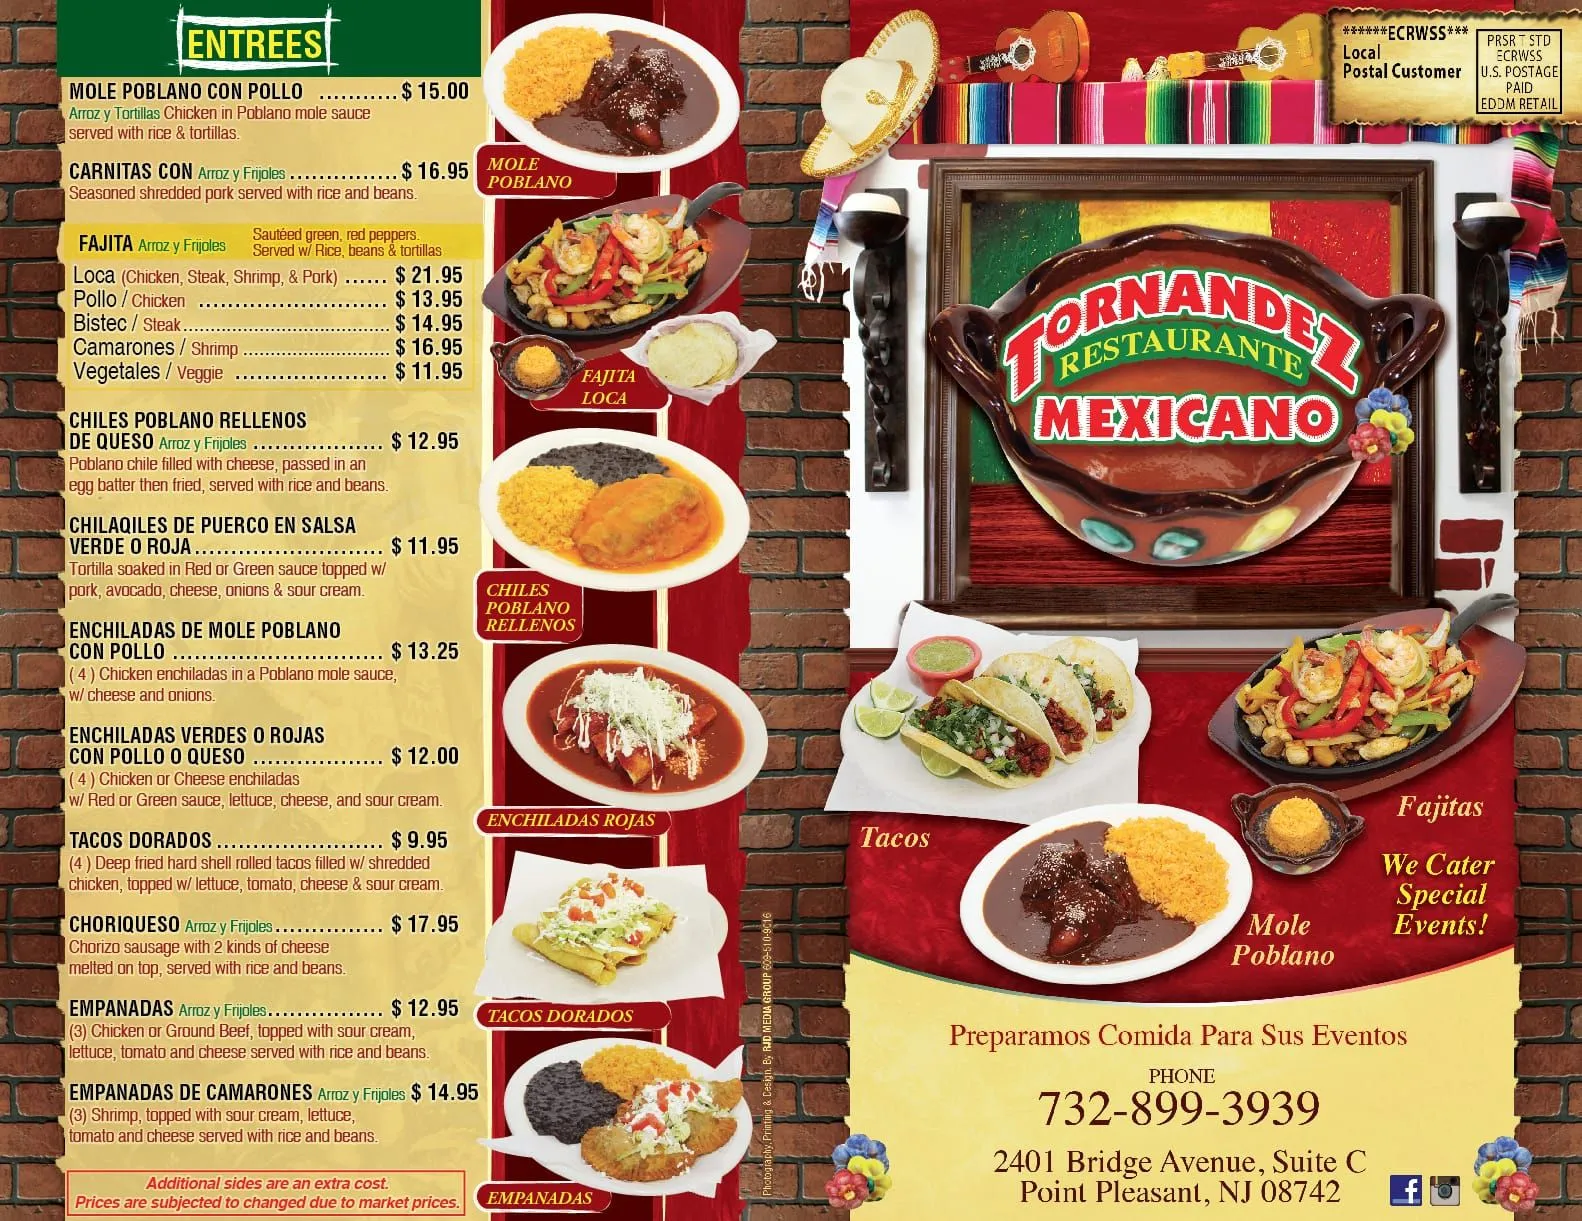 Tornandez Restaurante Mexicano Menu - Urbanspoon/Zomato